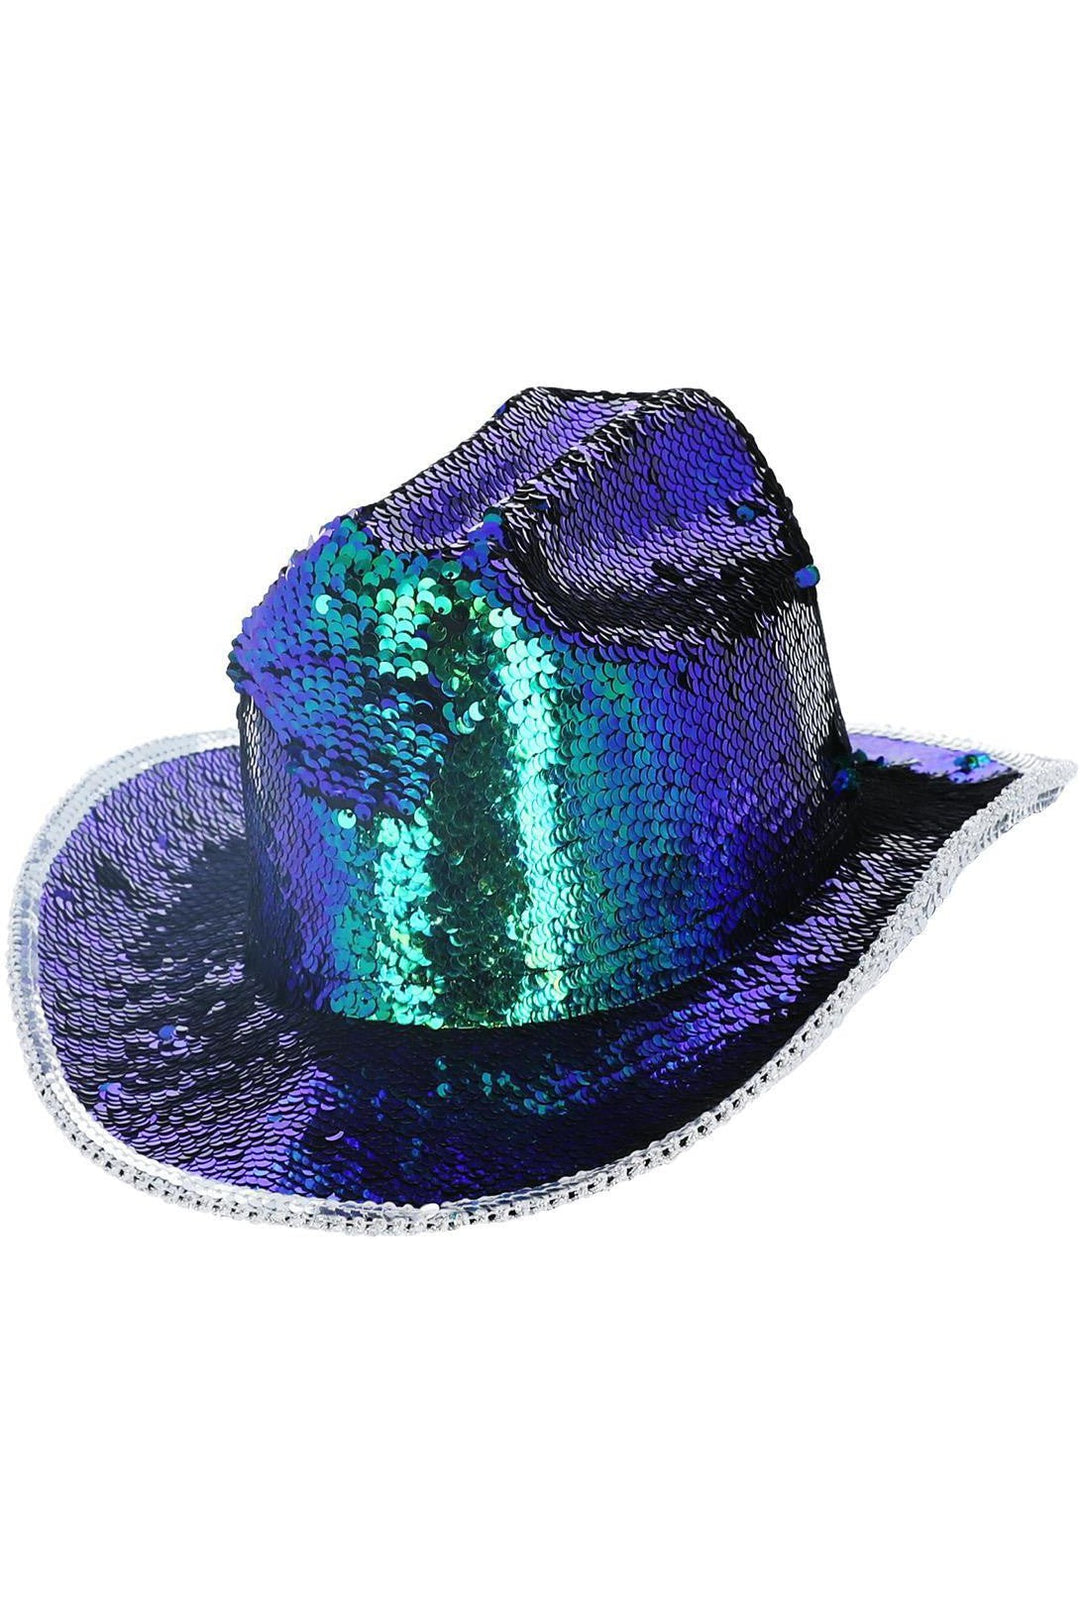 Fever Deluxe Sequin Cowgirl Hat